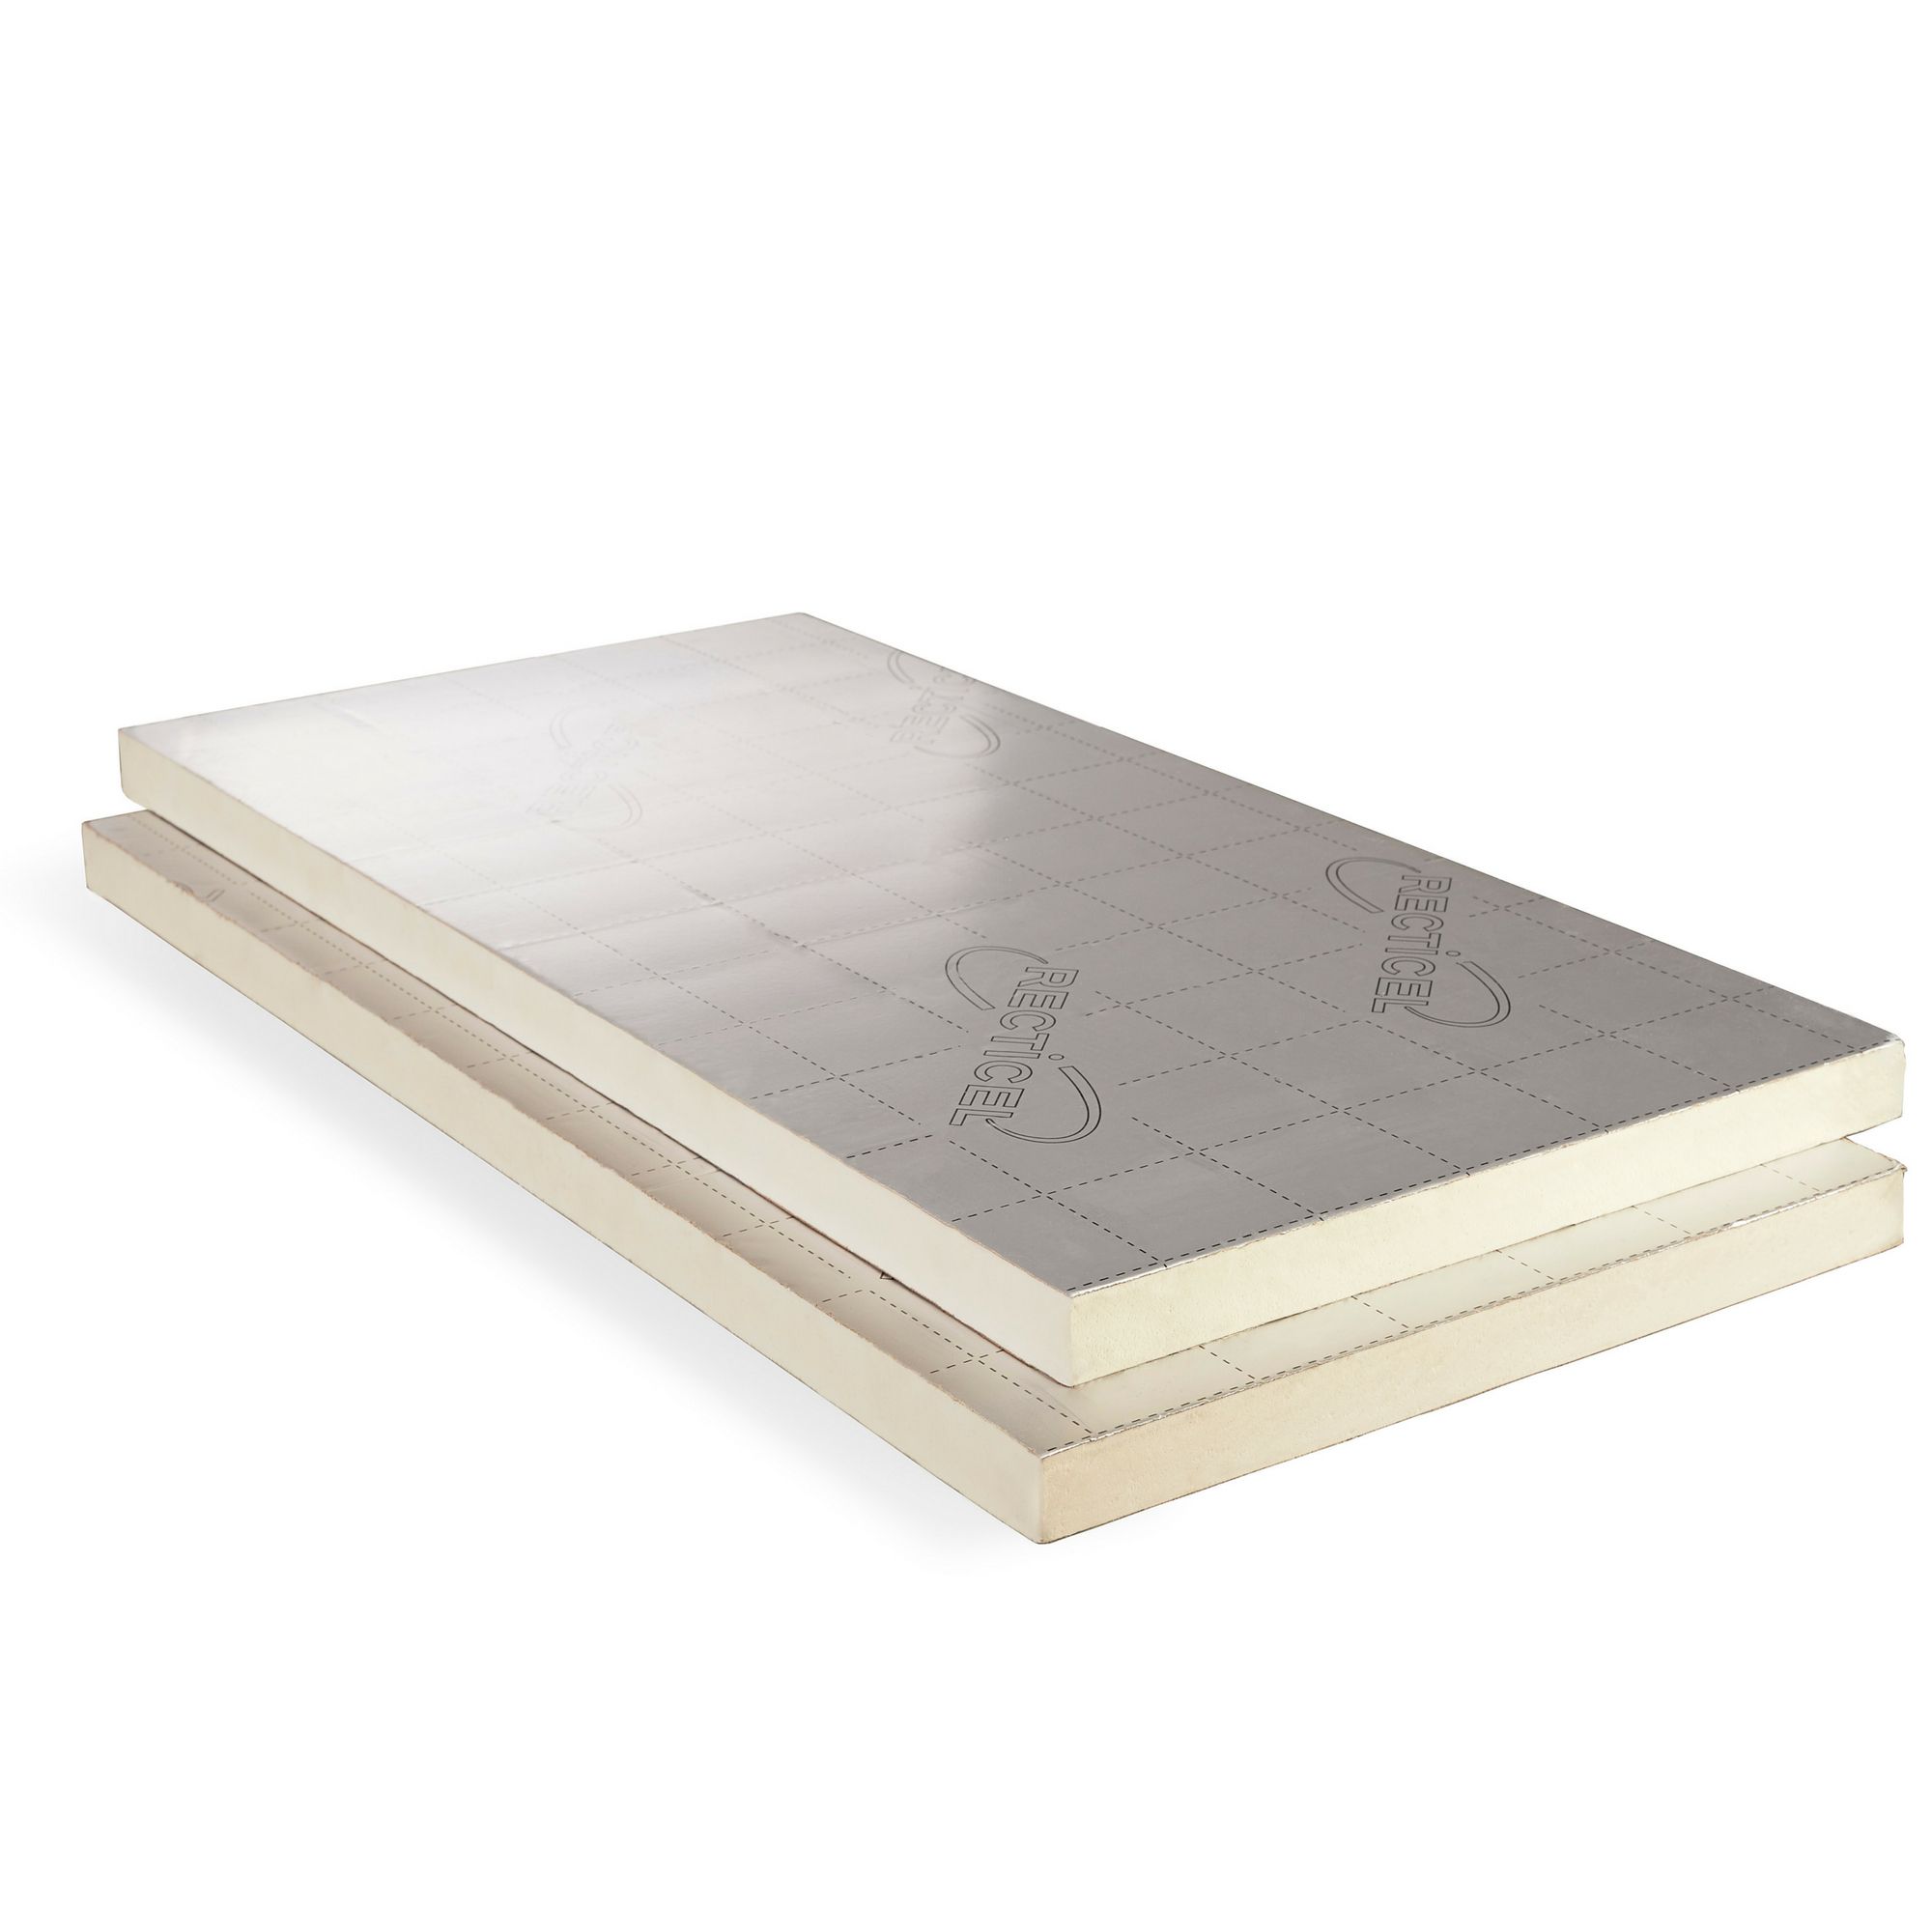 Recticel Instafit Polyurethane Insulation Board L 2 4m W 1 2m T